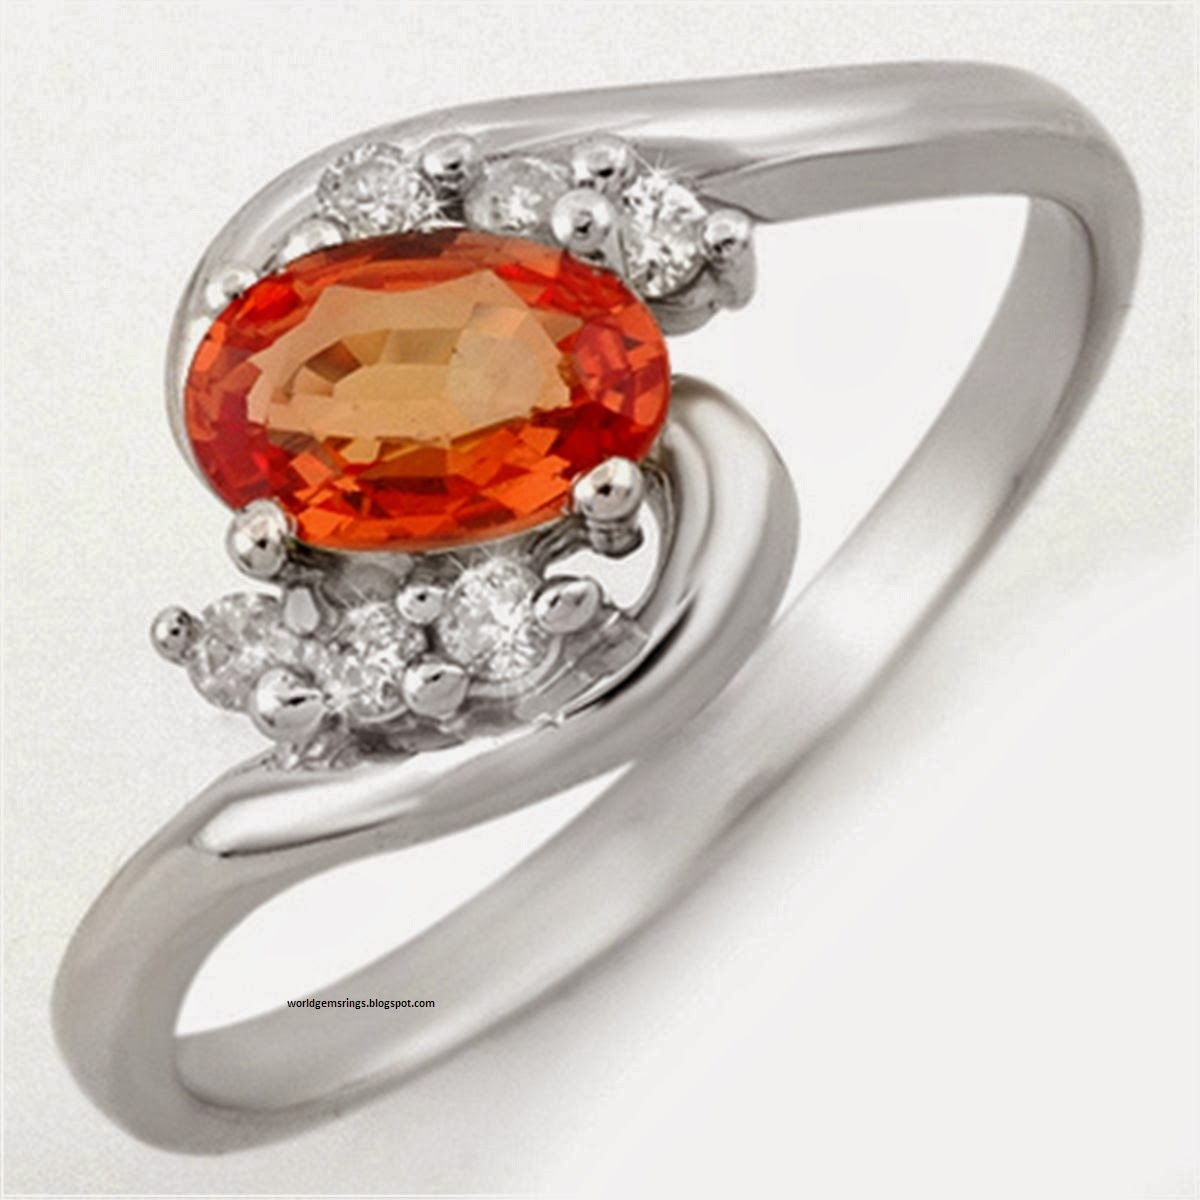 ... Ring+Beautiful+party+ring+orange_sapphire+and+diamond+14k+wedding+ring